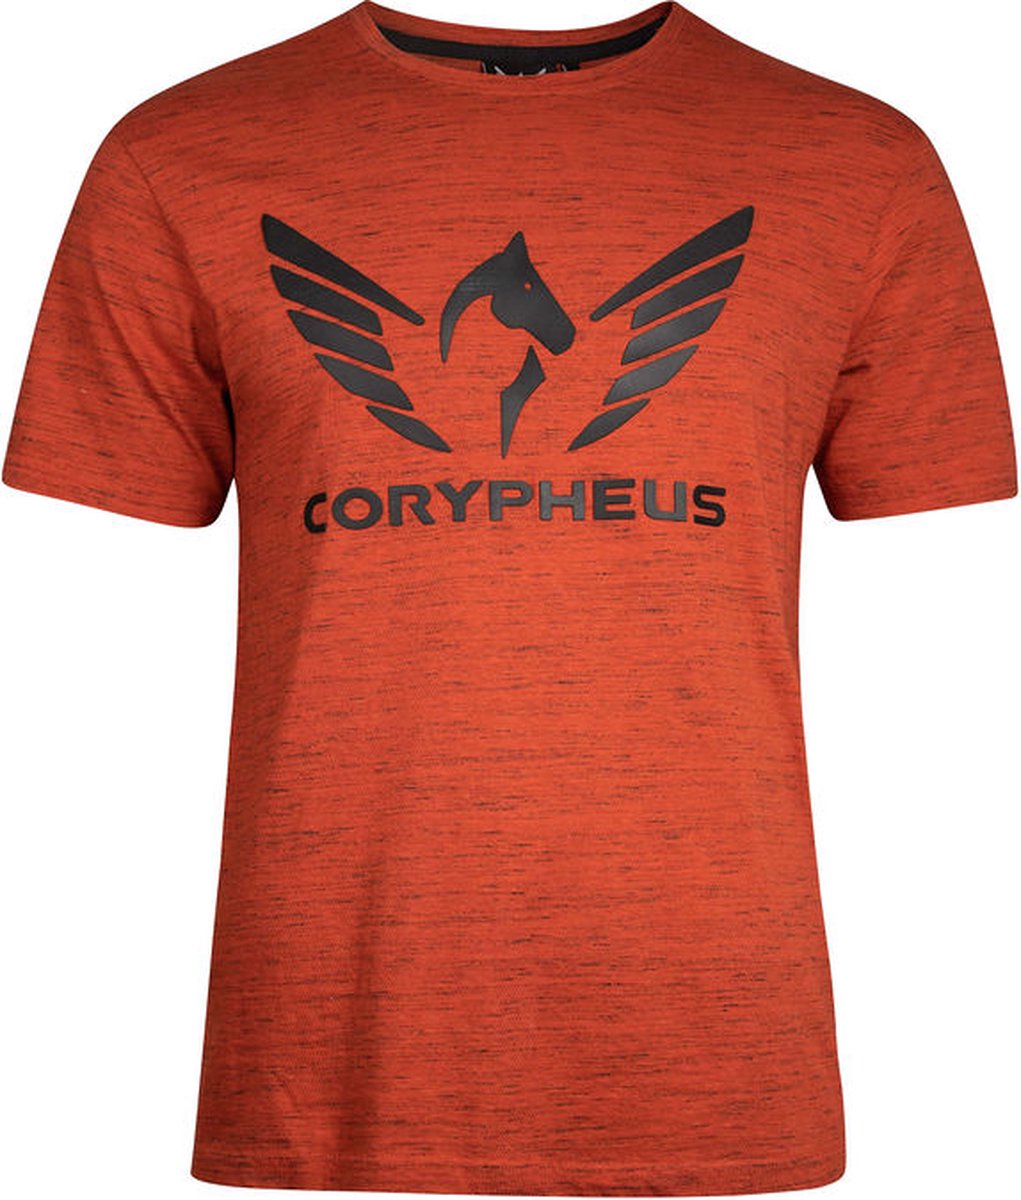 Corypheus Burnt Henna Men's T-Shirt - Large